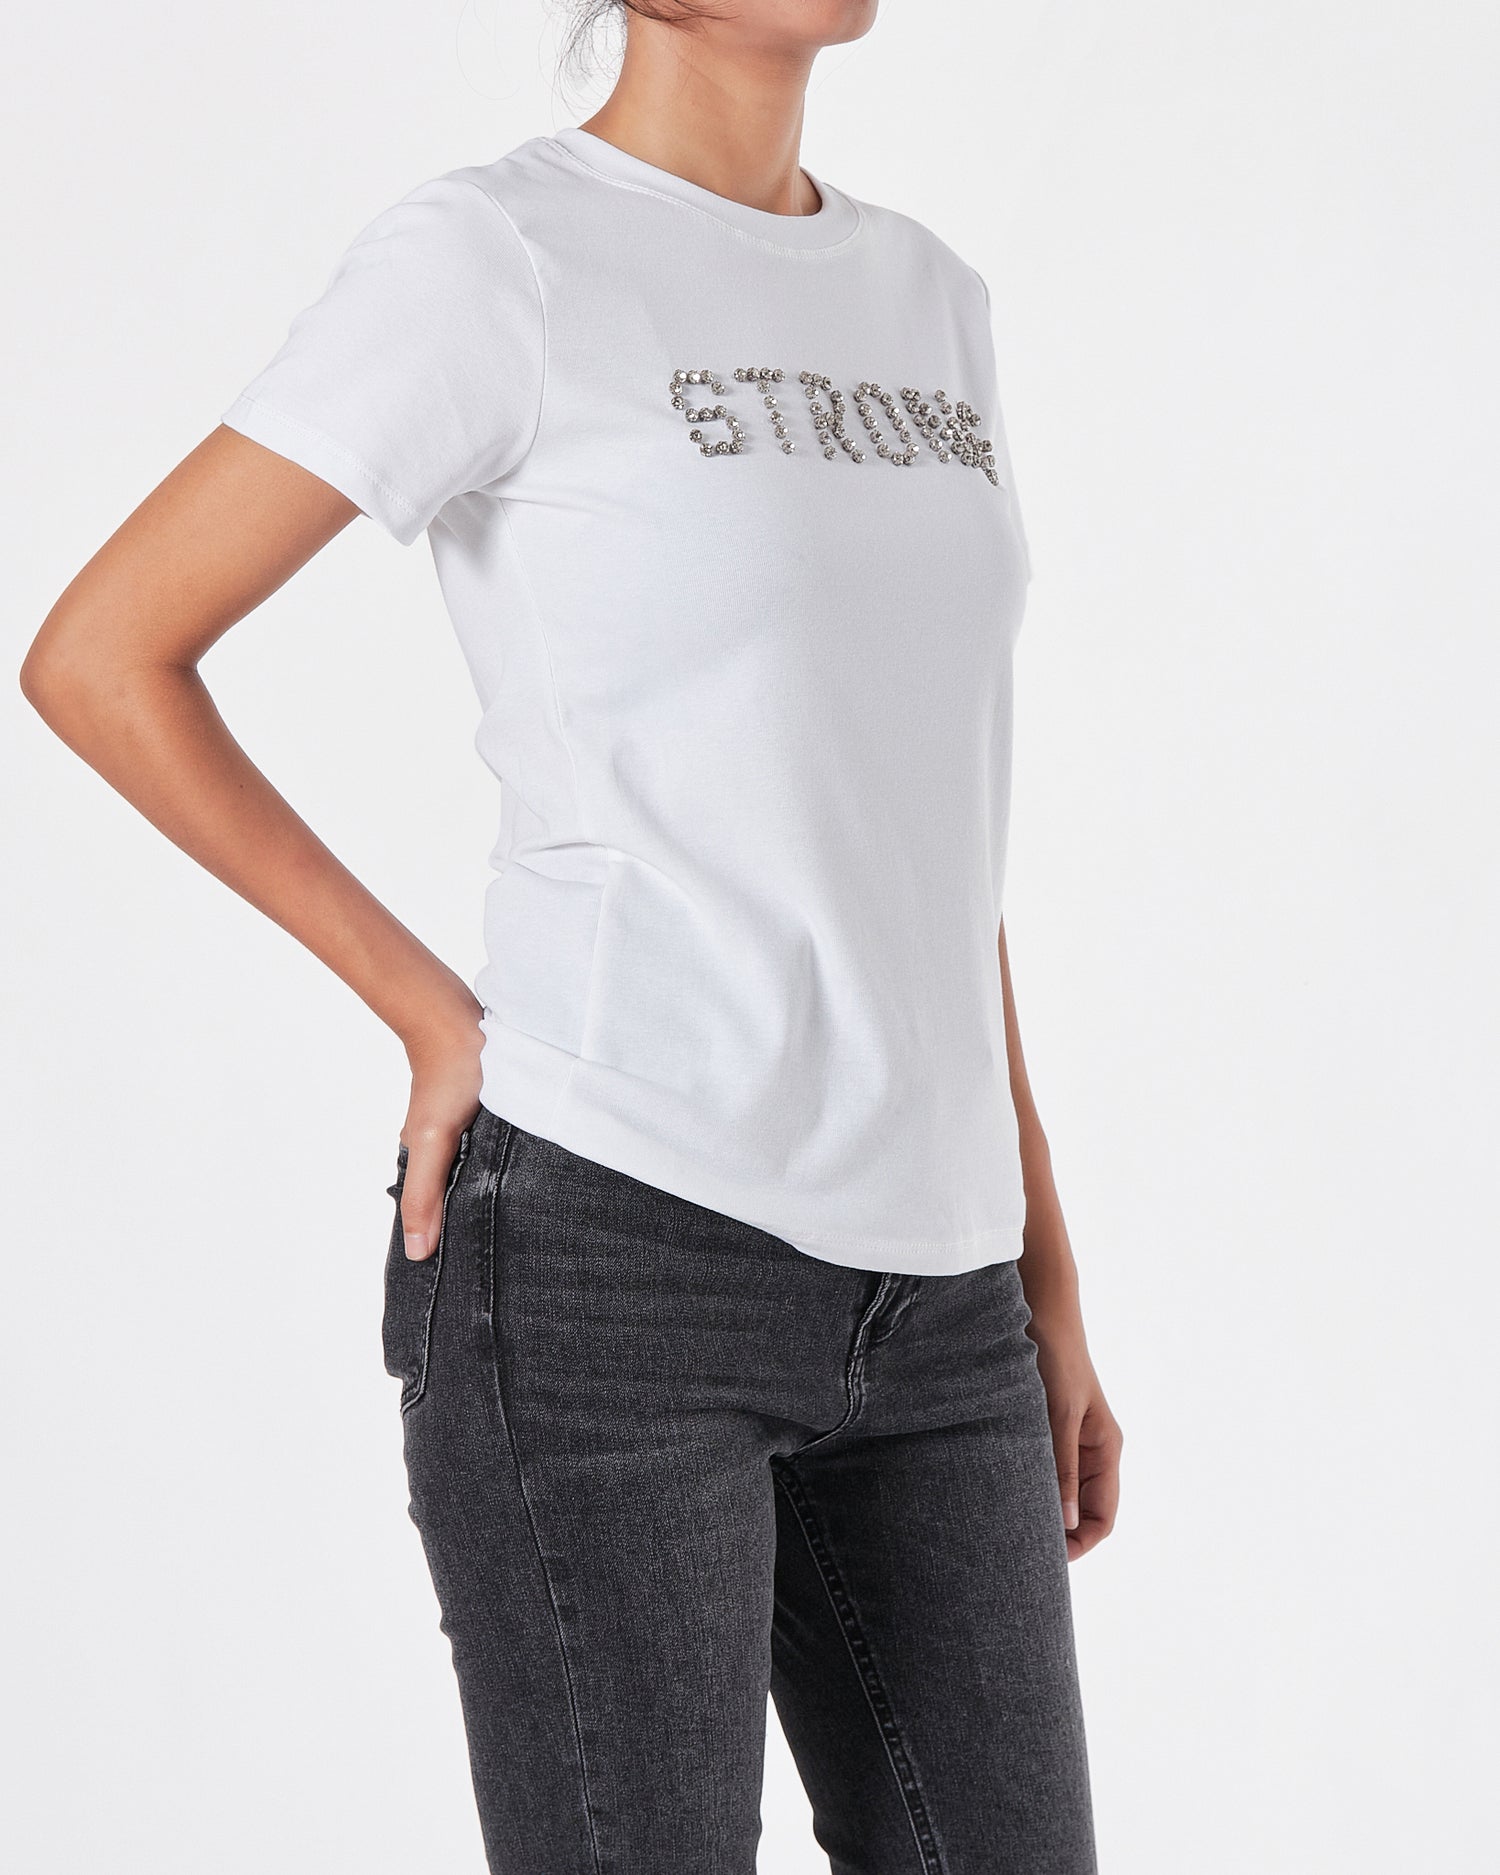 Strong Rhinestone Lady White T-Shirt 11.90